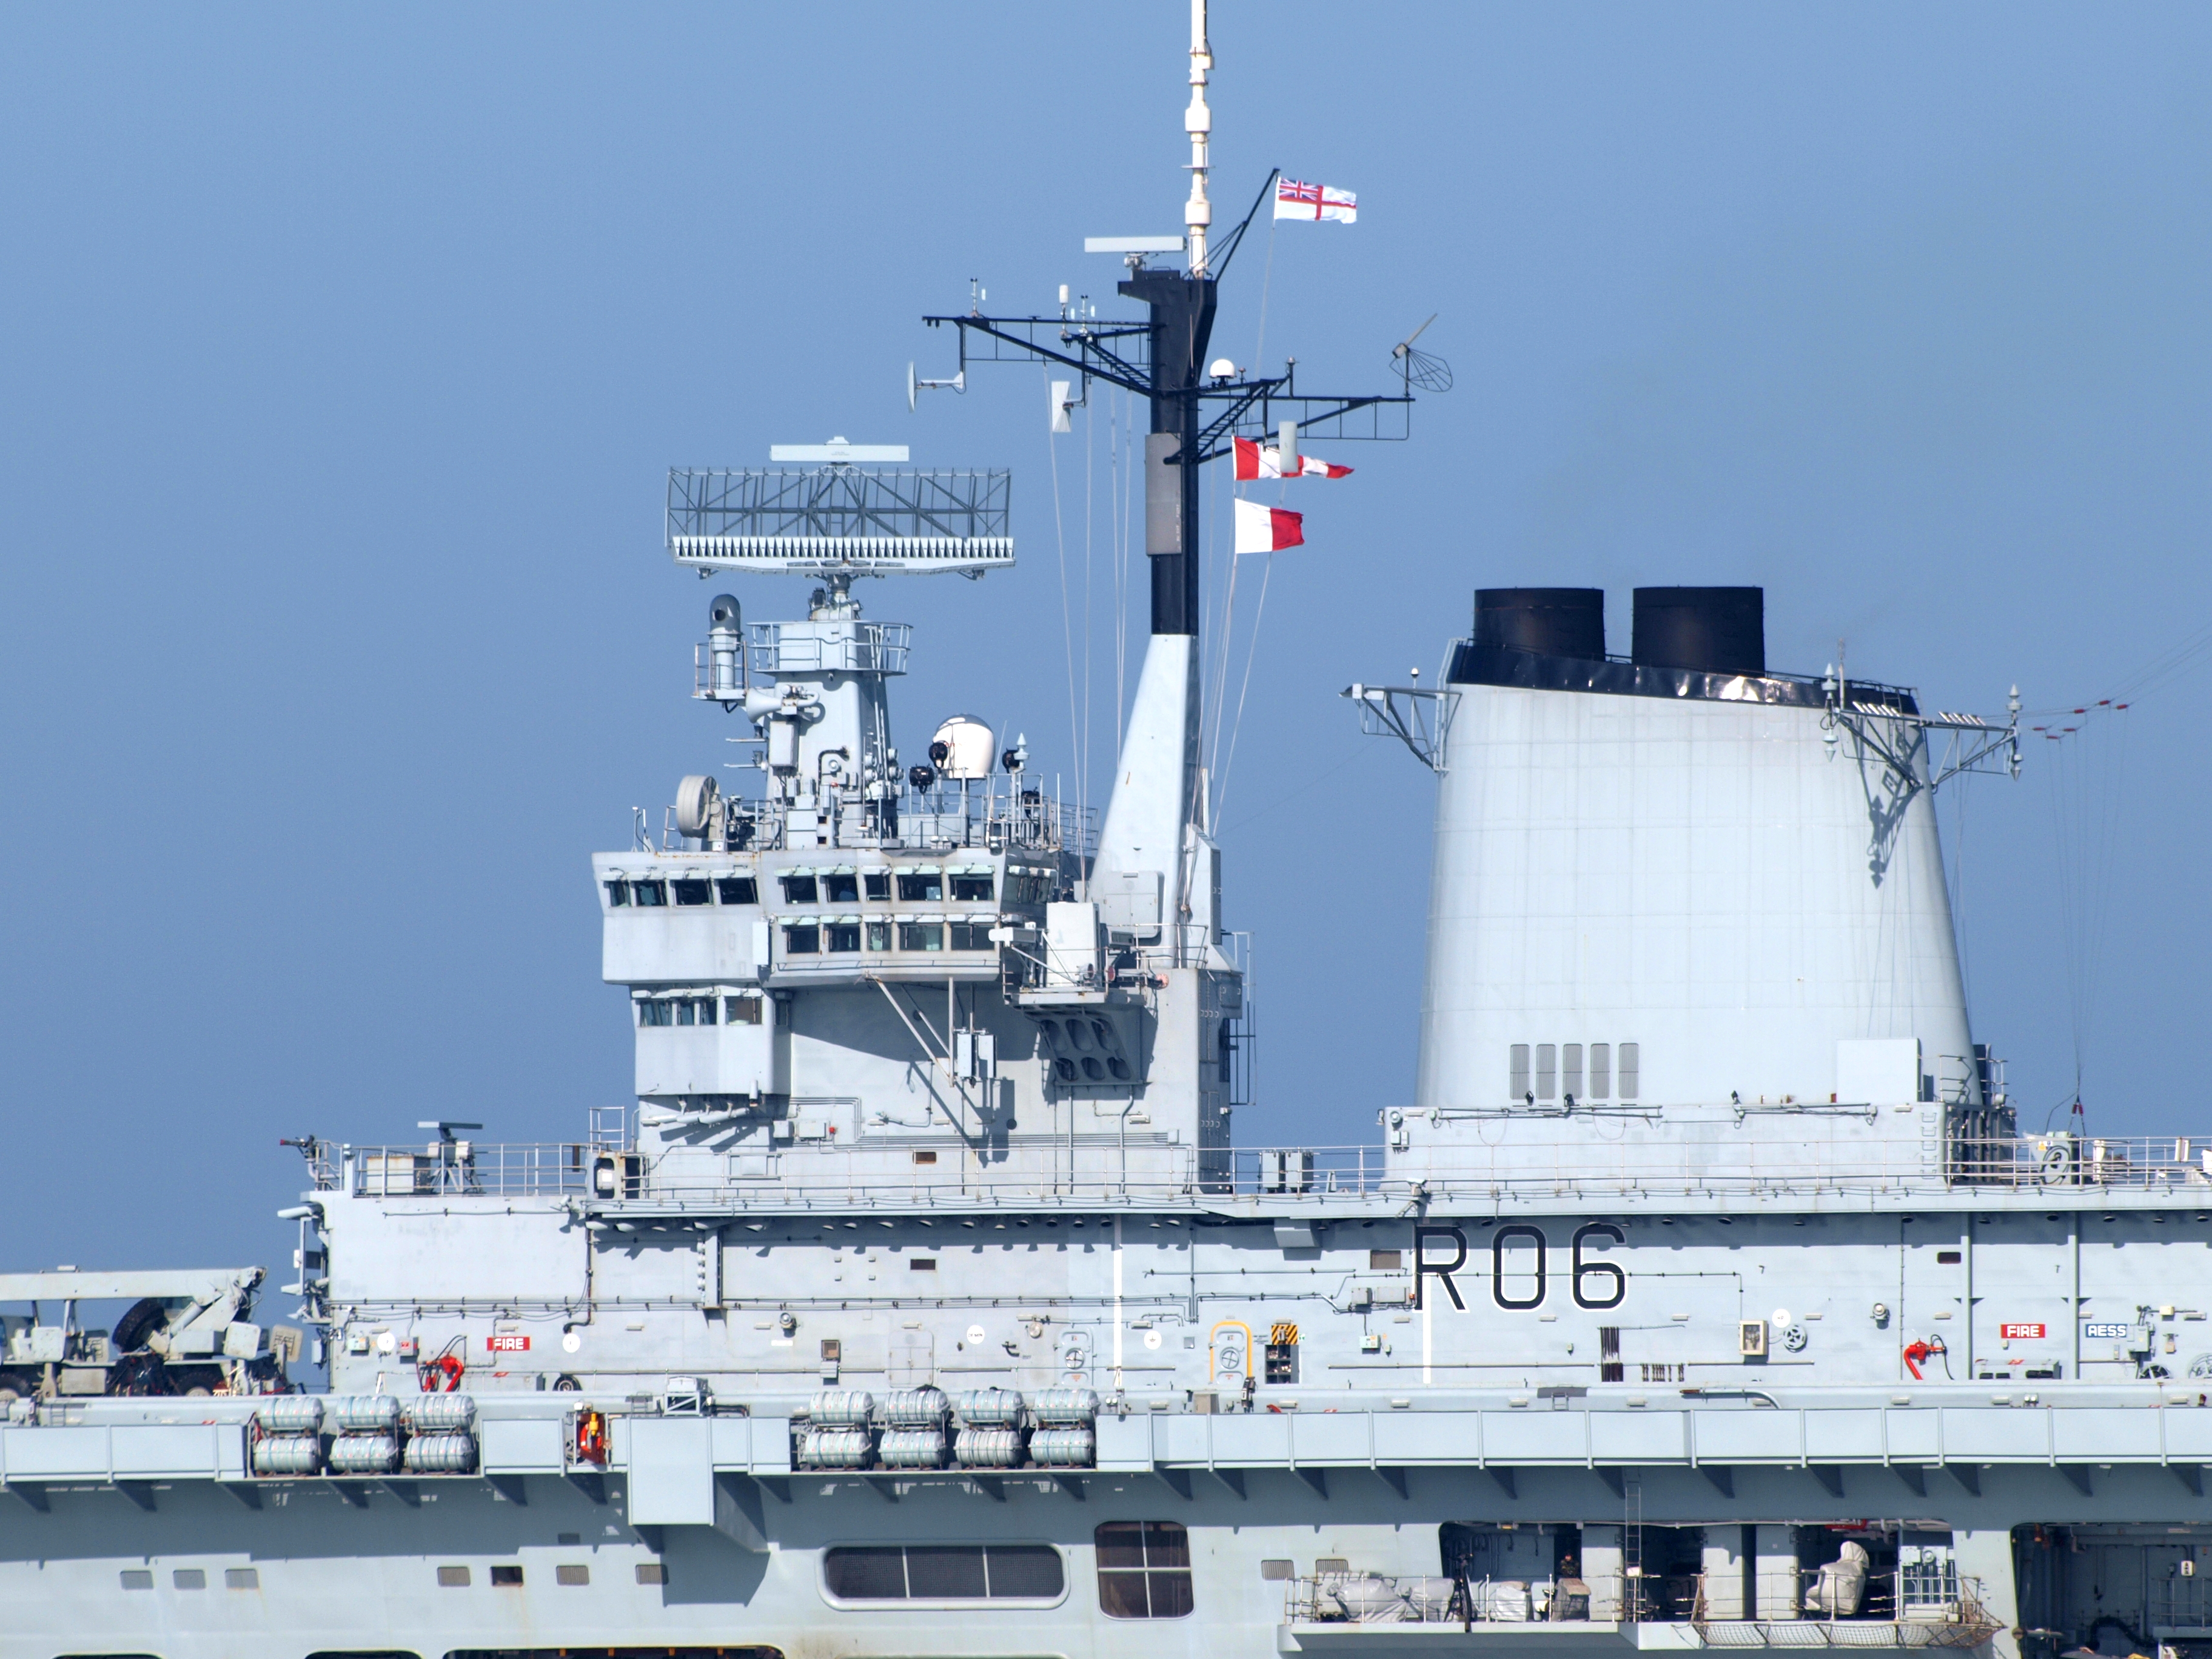 HMS Illustrious (R06) at Port of Amsterdam, 02Mar2009 p7